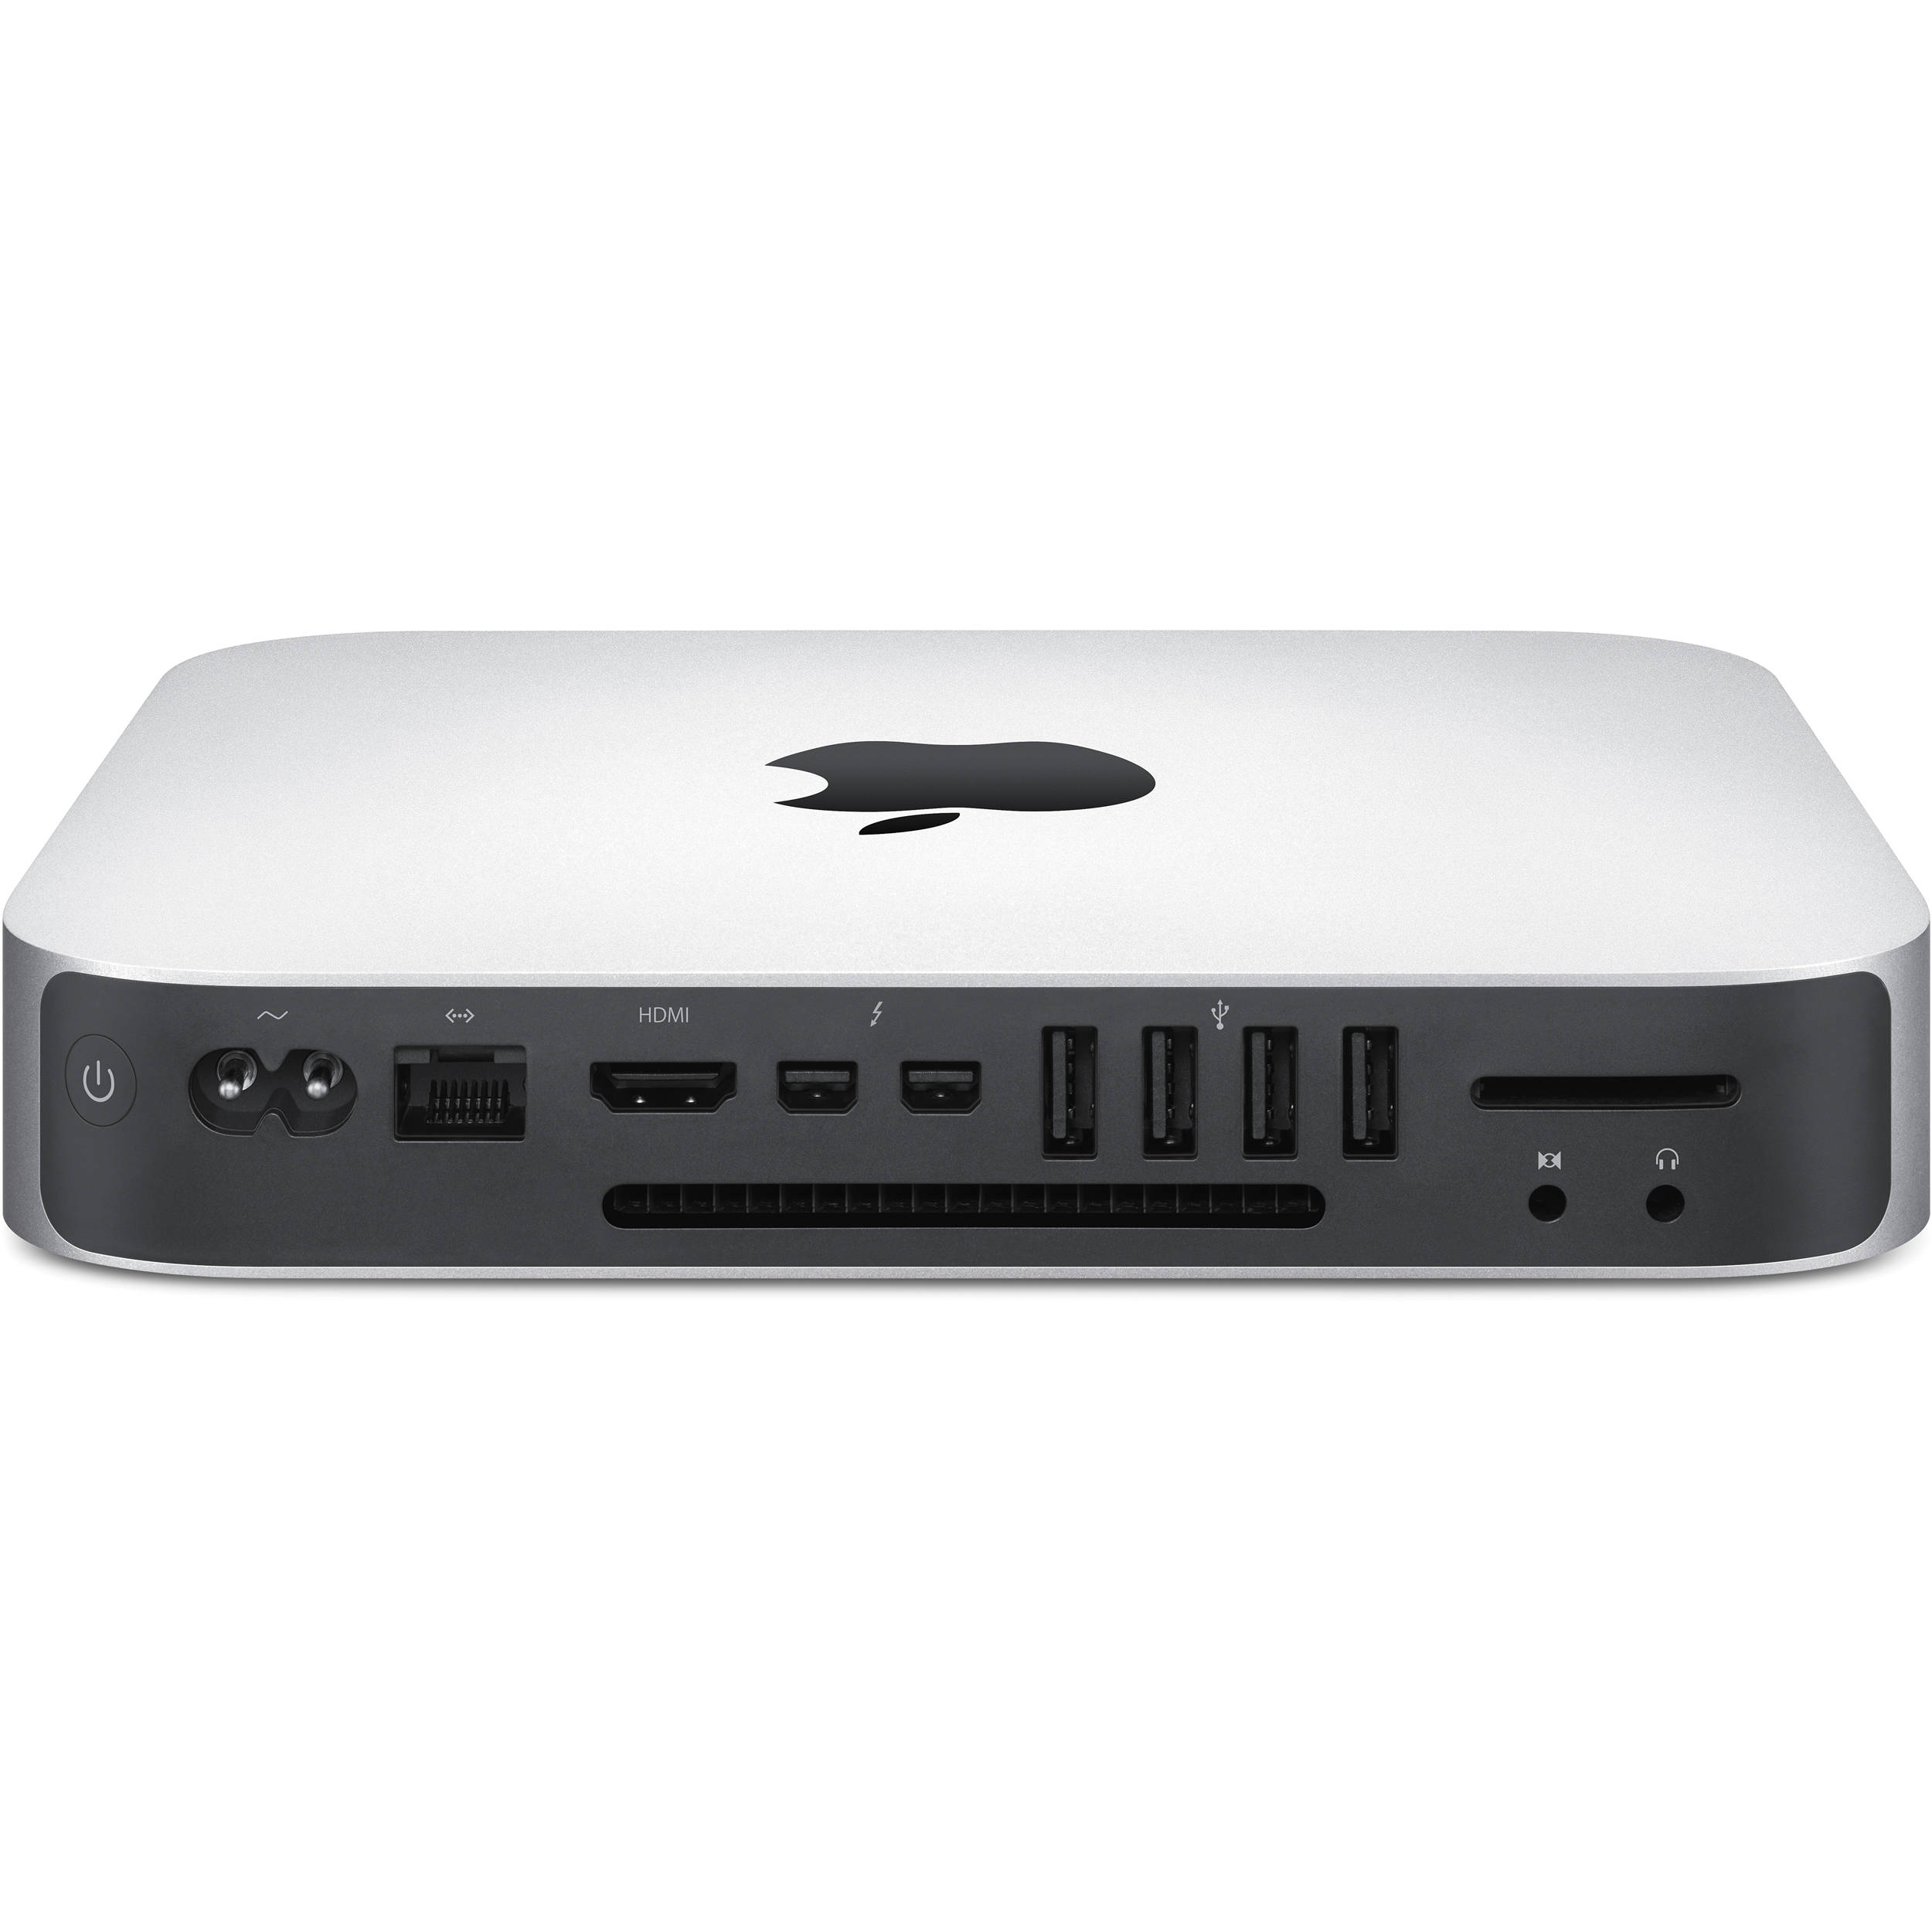 Apple Mac Mini 1 4 Ghz Desktop Computer Late 2014 Mgem2ll A